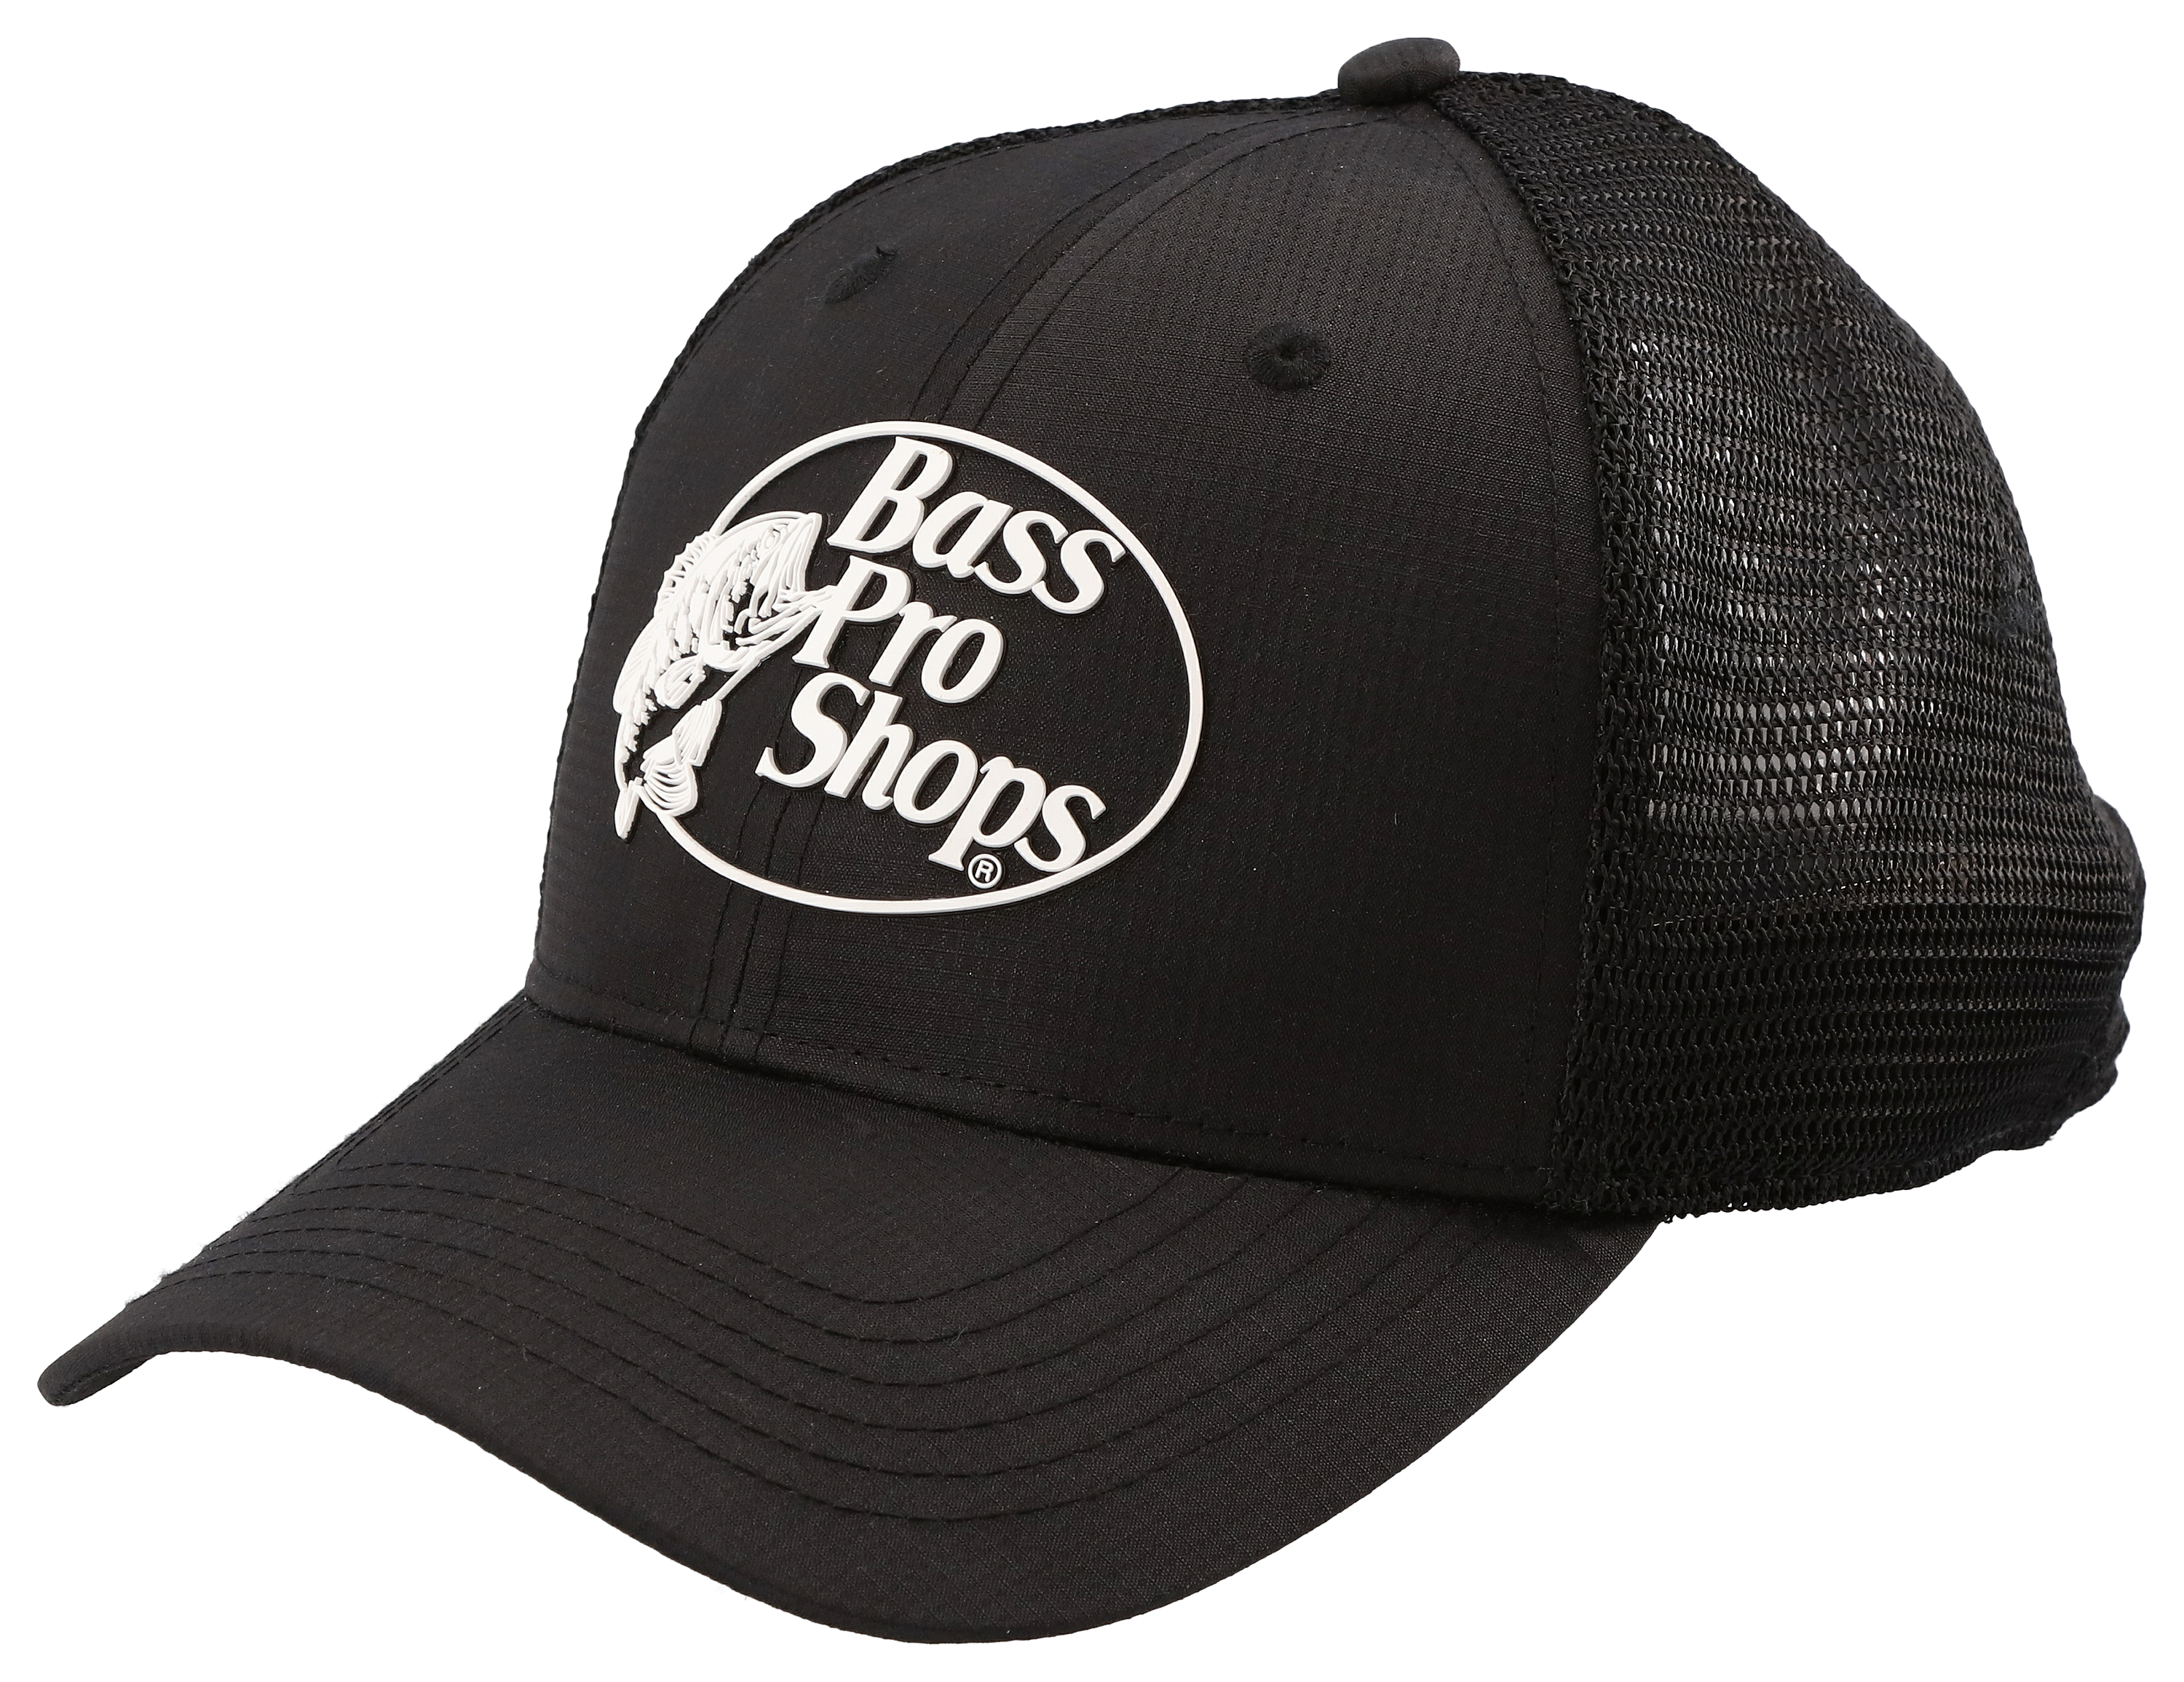 Bass Pro Shops Logo Mesh Cap For Kids, 58% OFF